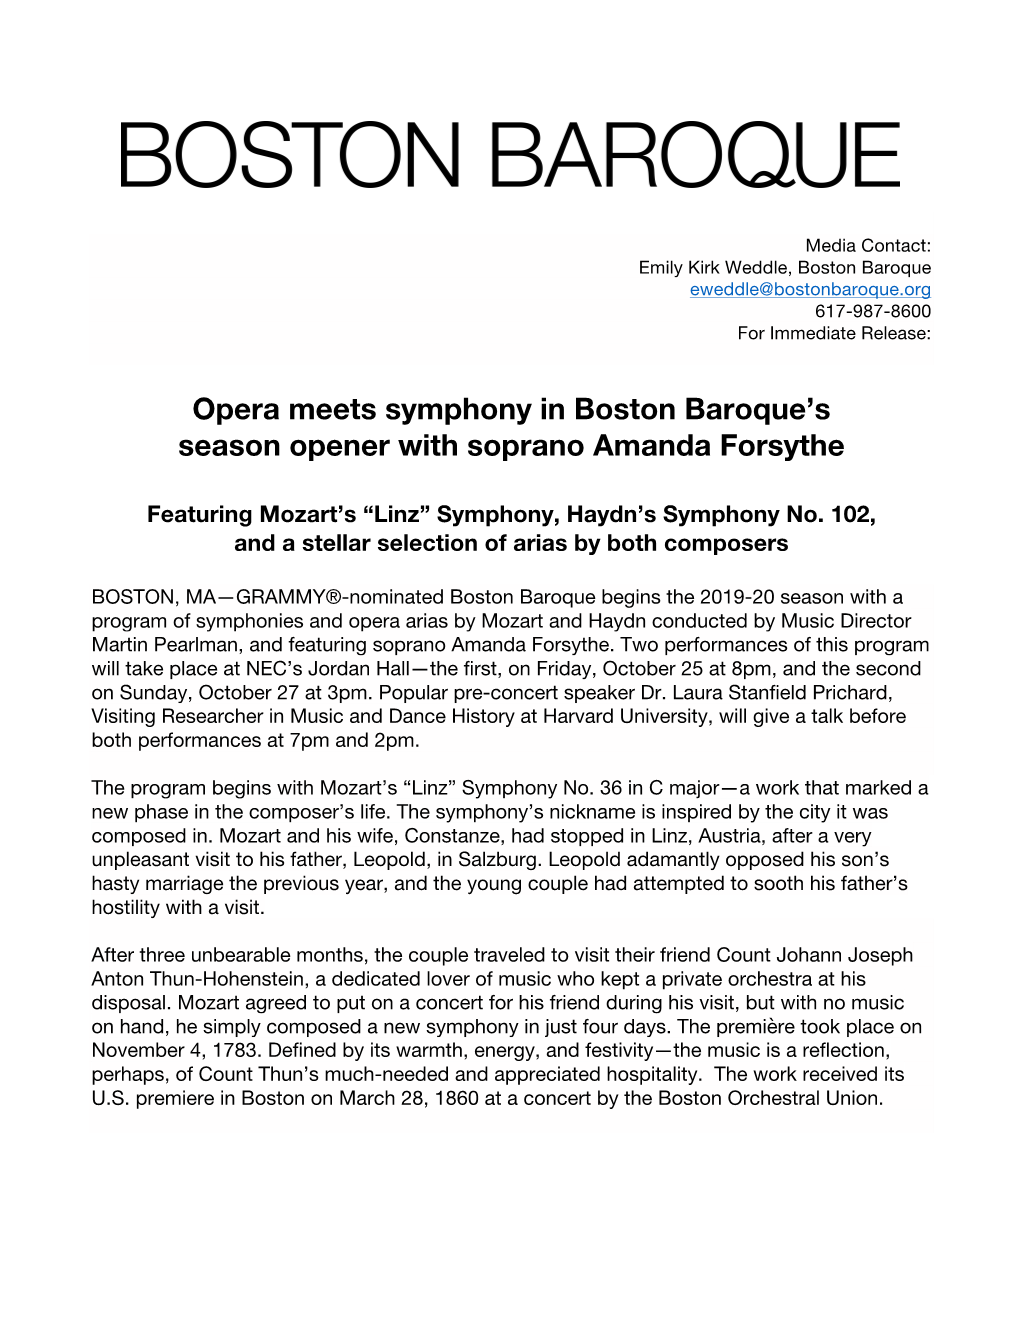 Opera Meets Symphony in Boston Baroque's Season Opener With